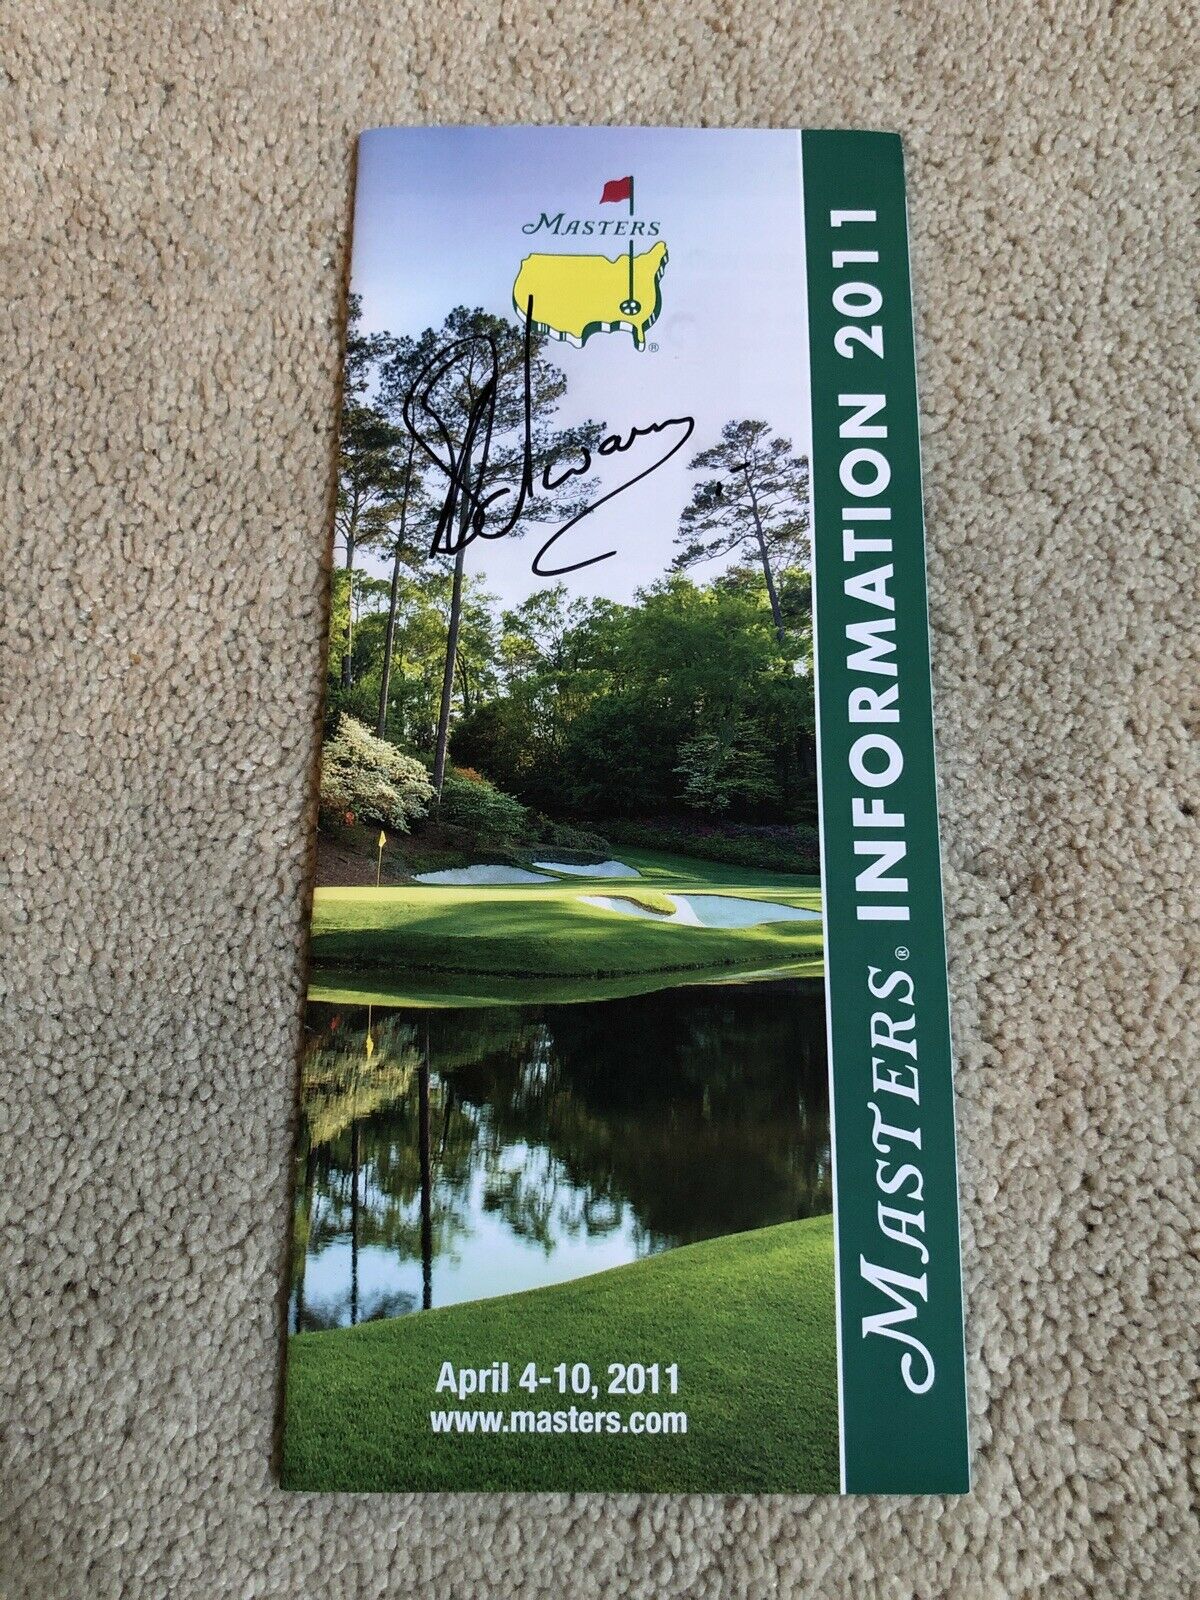 Charl Schwartzel 2011 Masters Signed Golf Spectator Guide Pga Tour